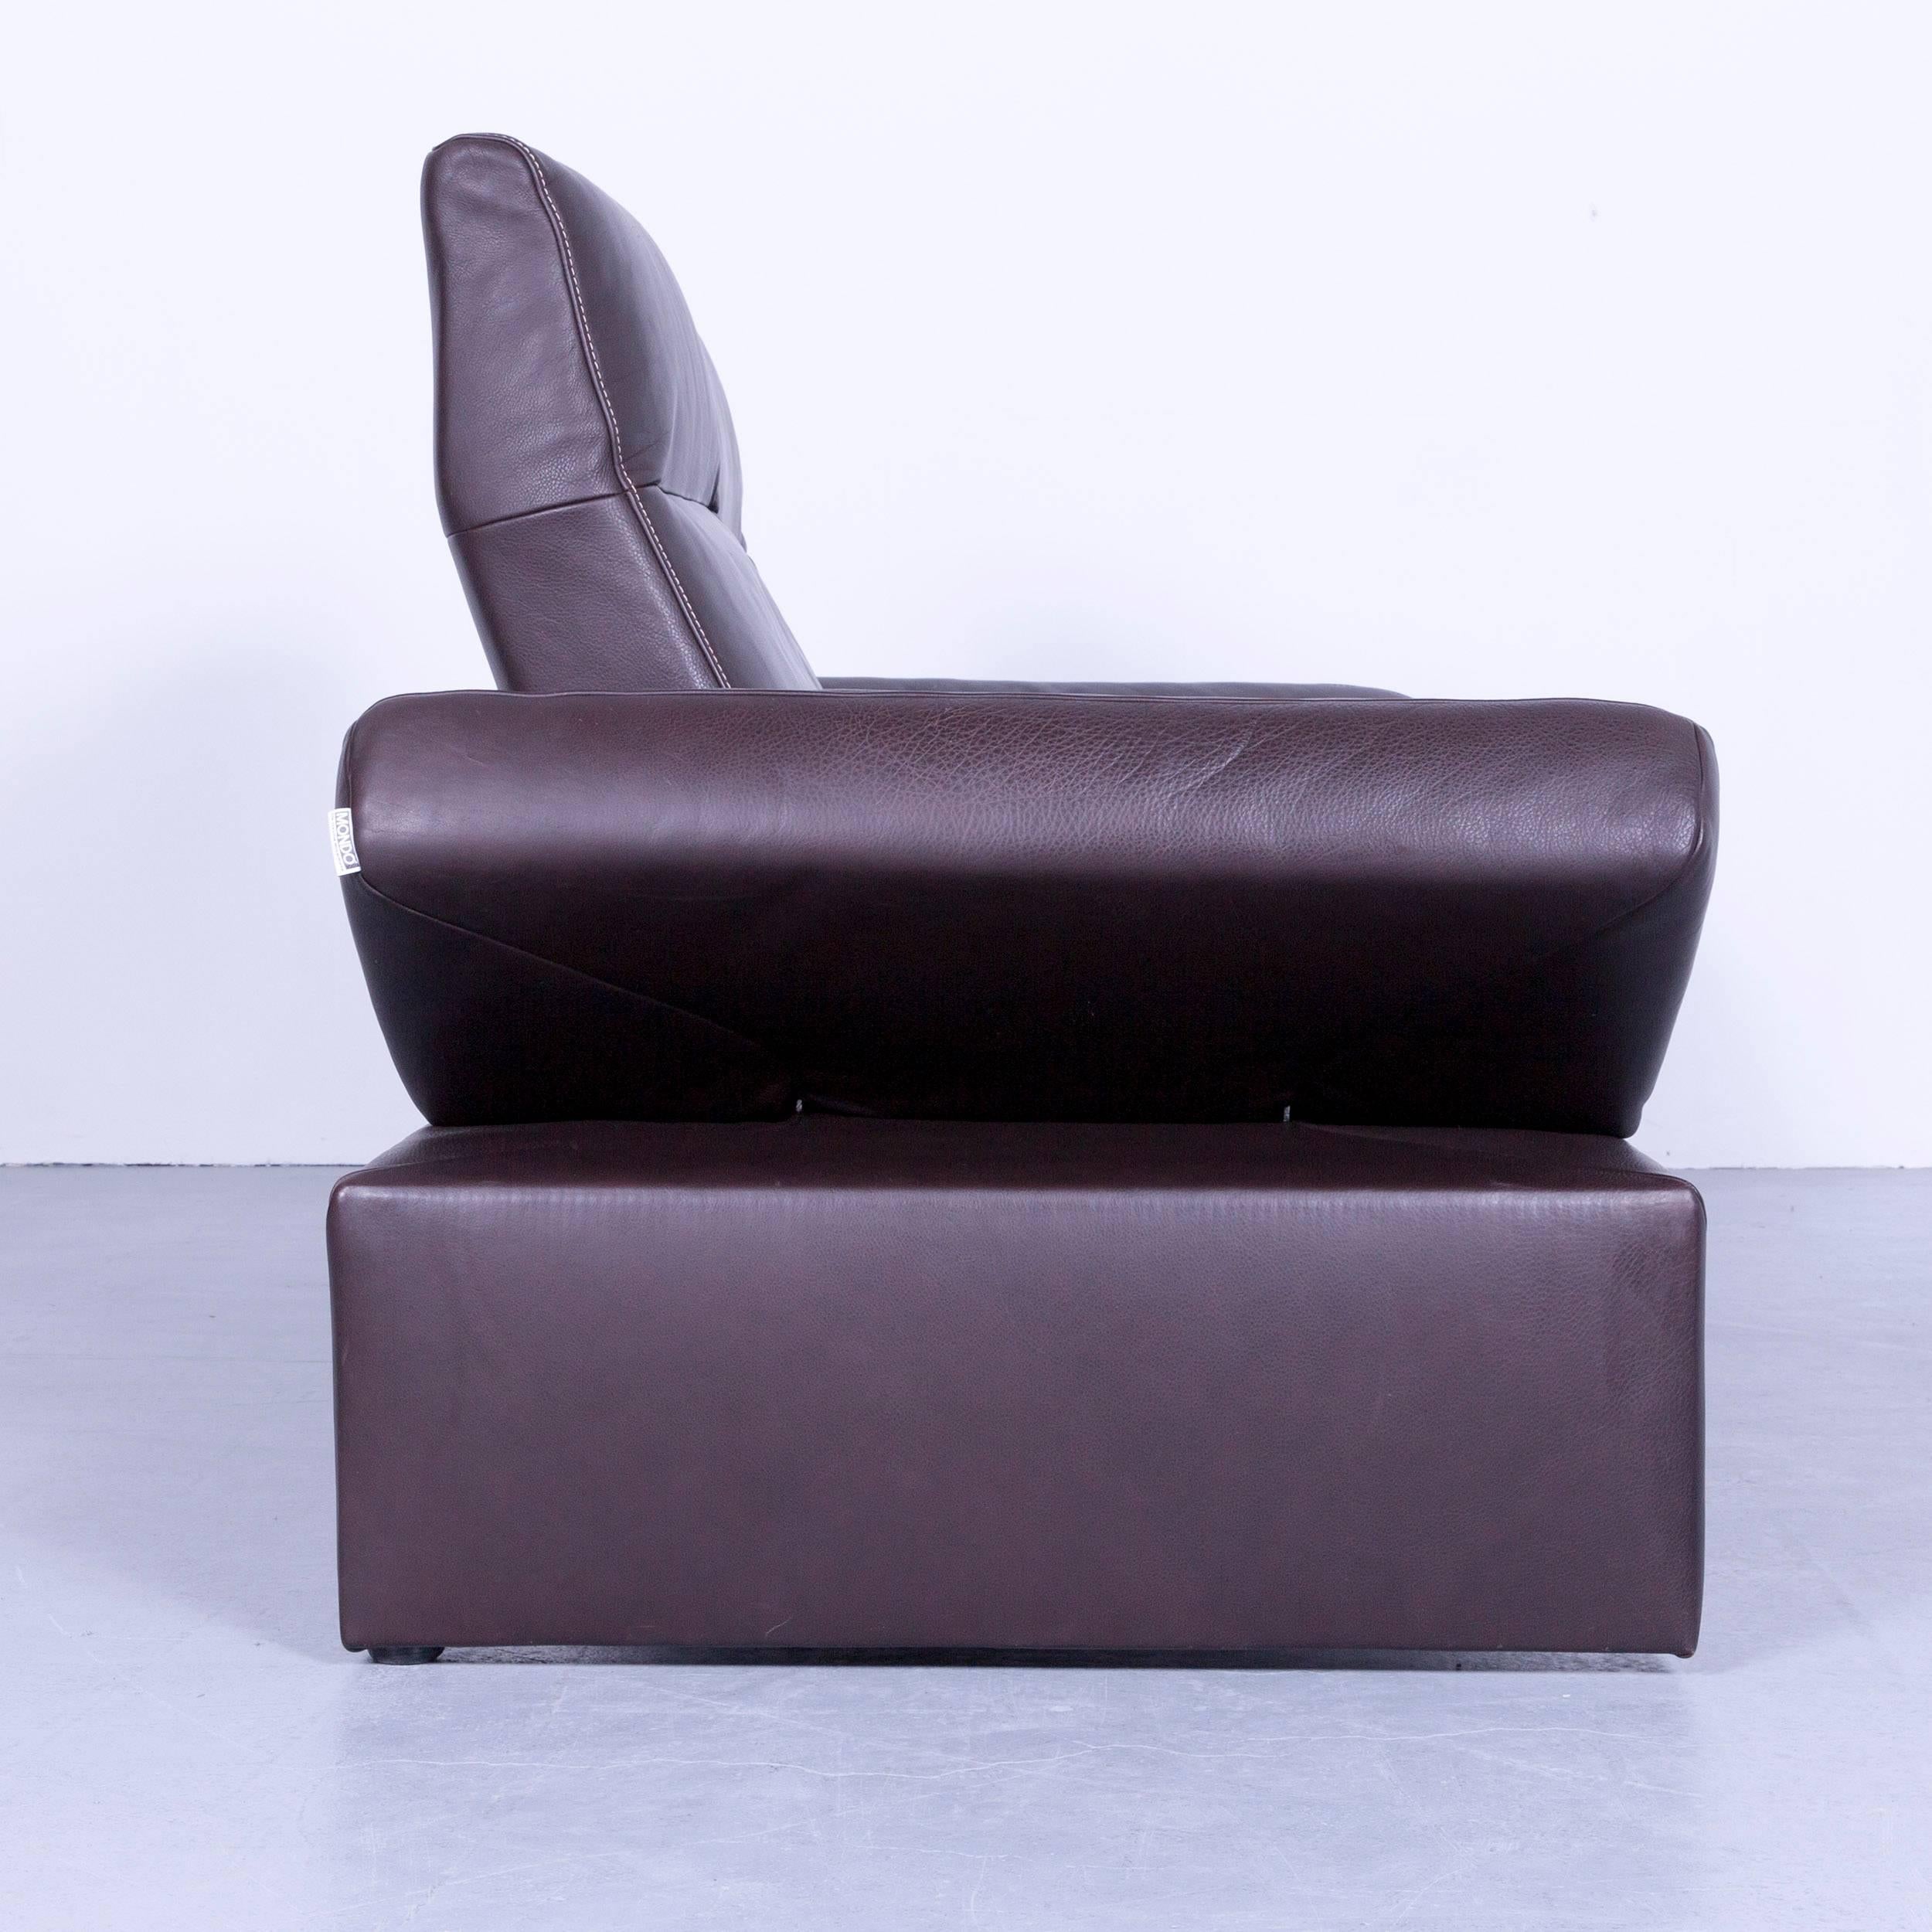 Leather Original Mondo Designer Sofa Brown Three-Seat Couch Modern Recliner Function